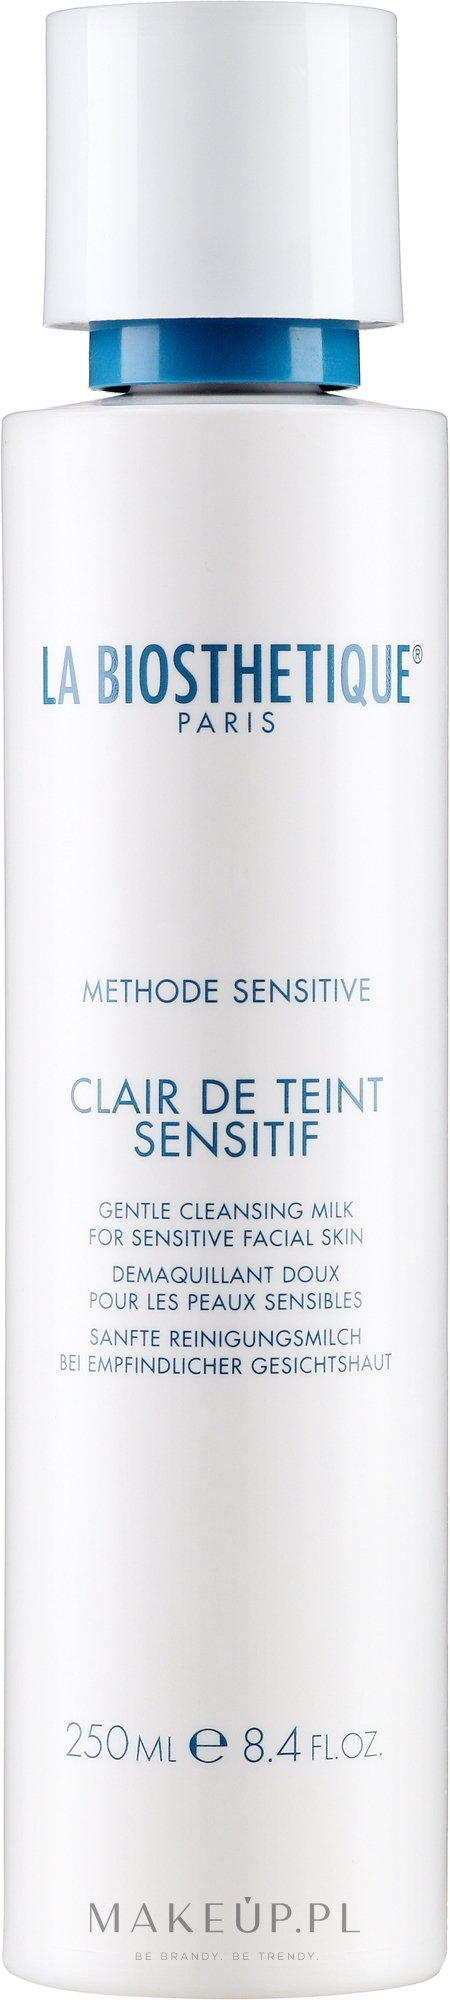 Delikatne mleczko do mycia twarzy - La Biosthetique Methode Sensitive Clair de Teint Sensitif Gentle Cleansing Milk — Zdjęcie 250 ml